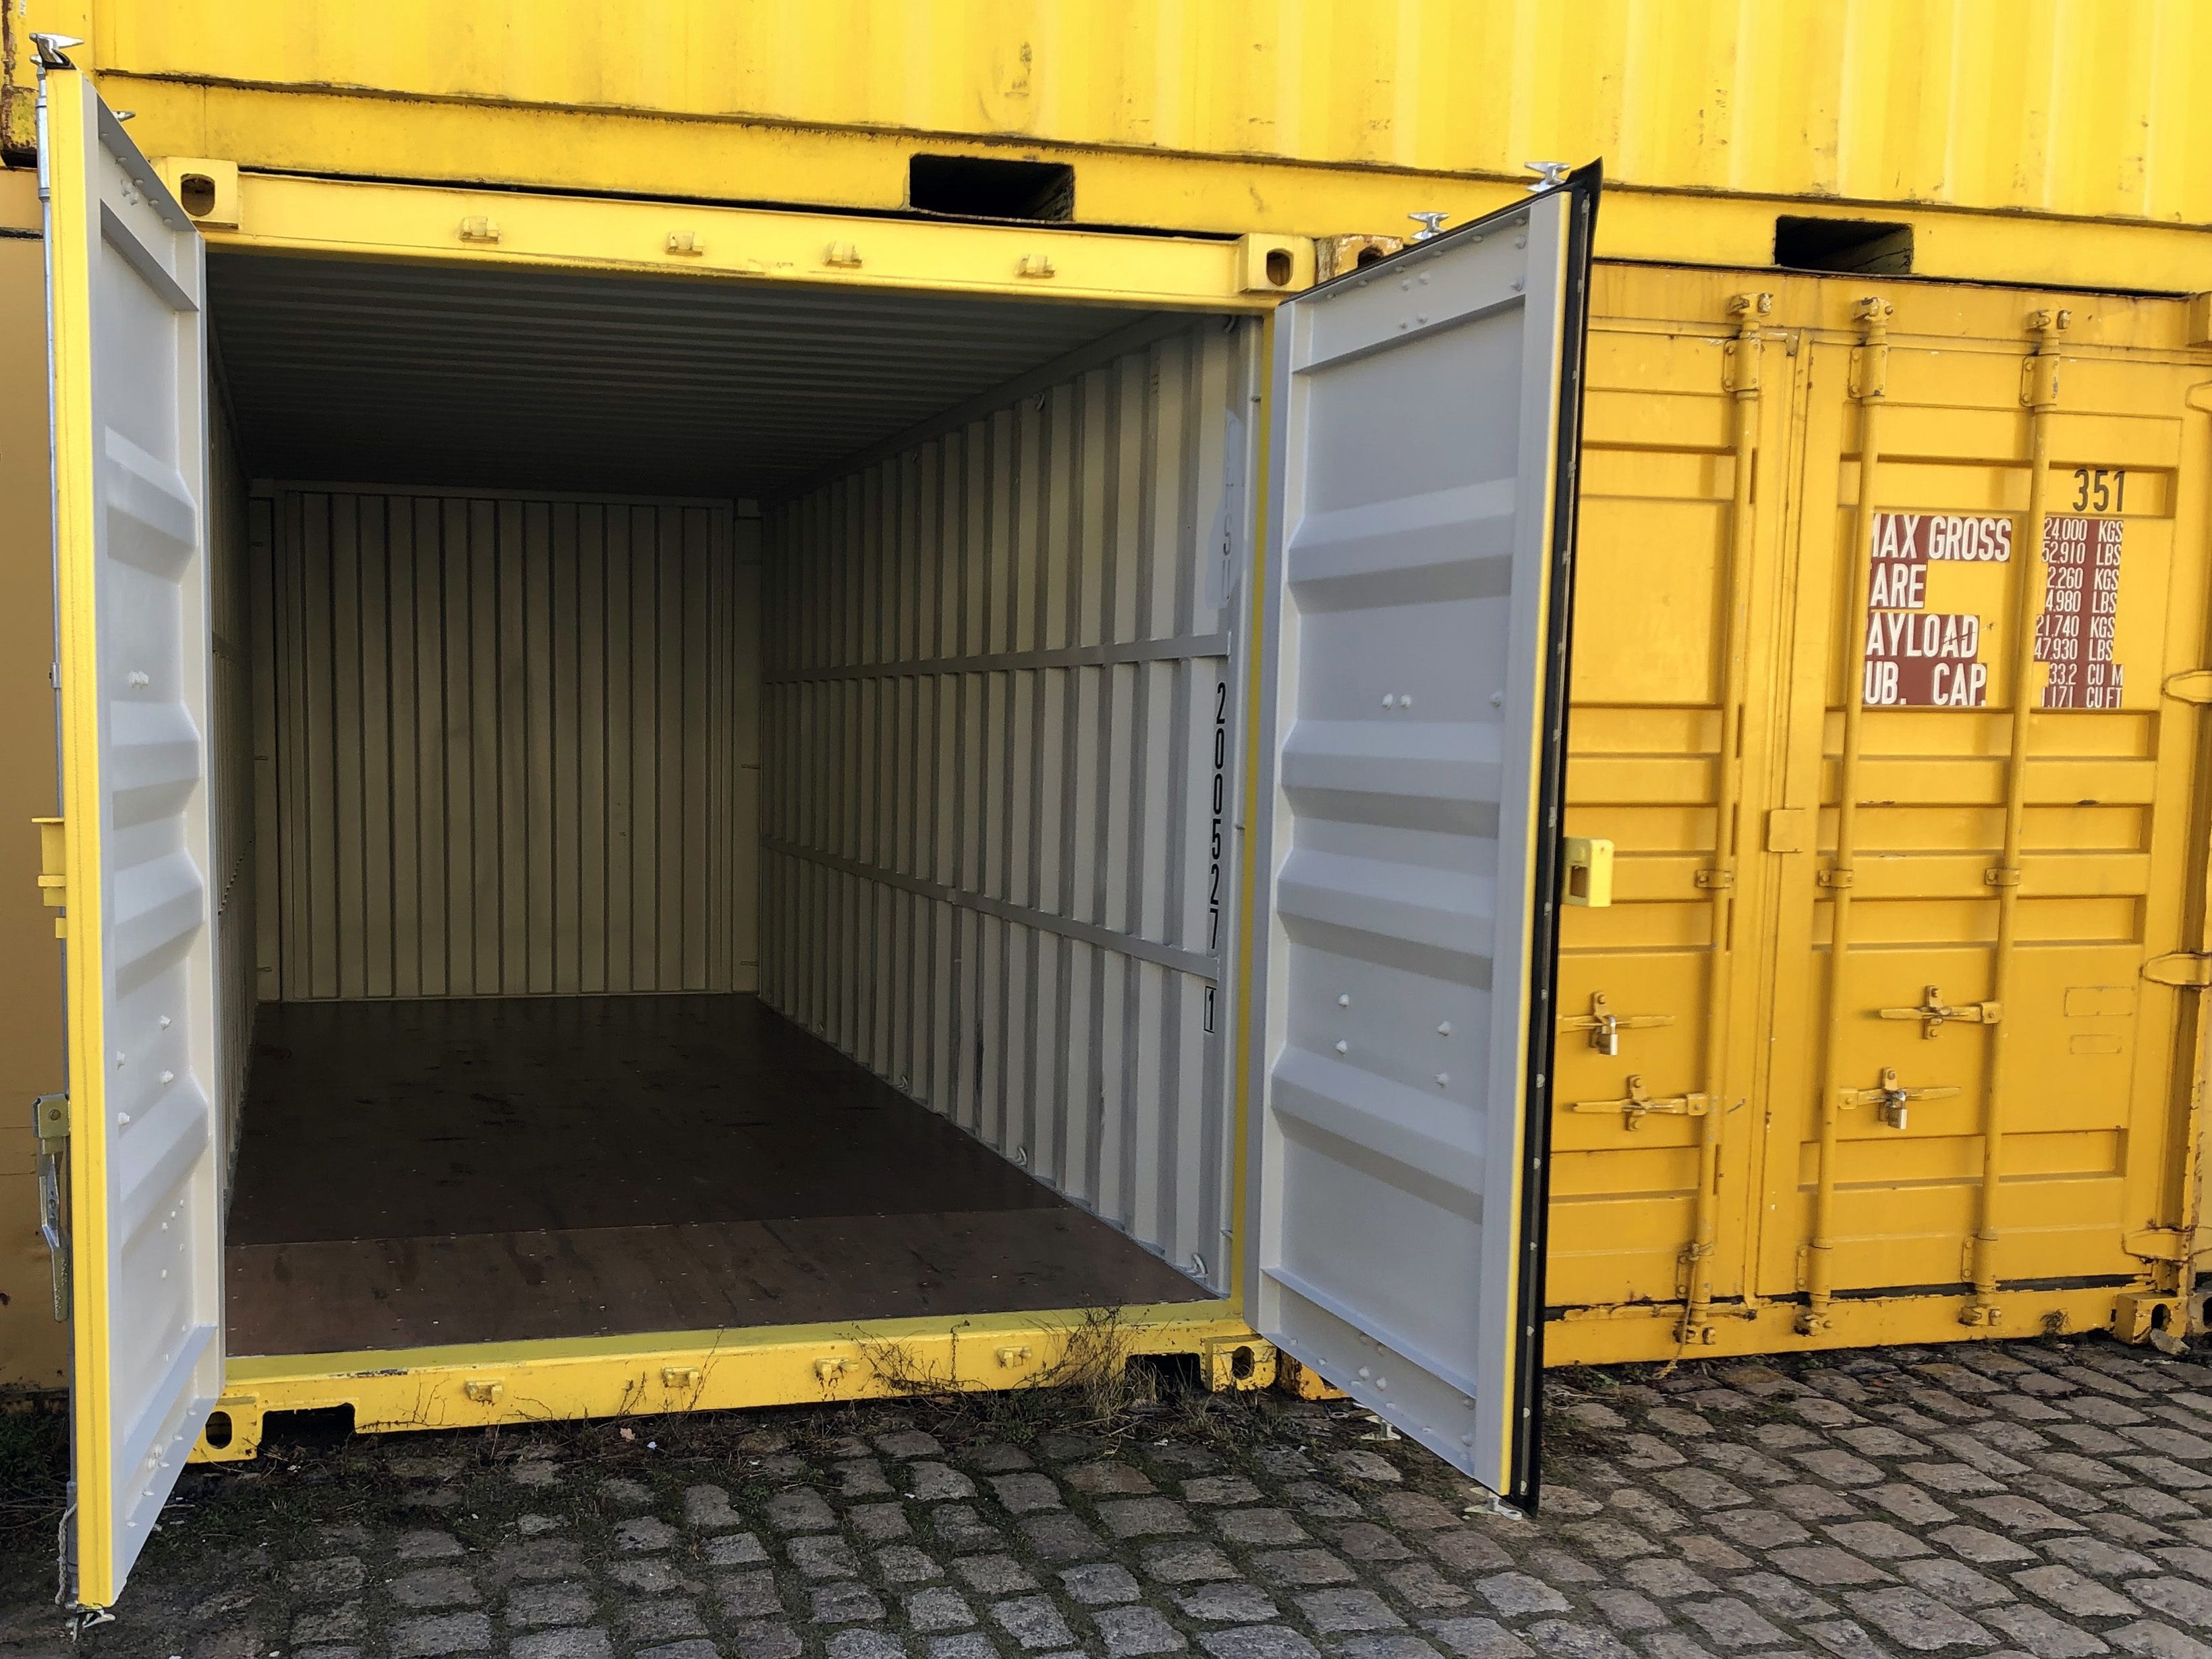 Hertling self storage cantainer in Berlin